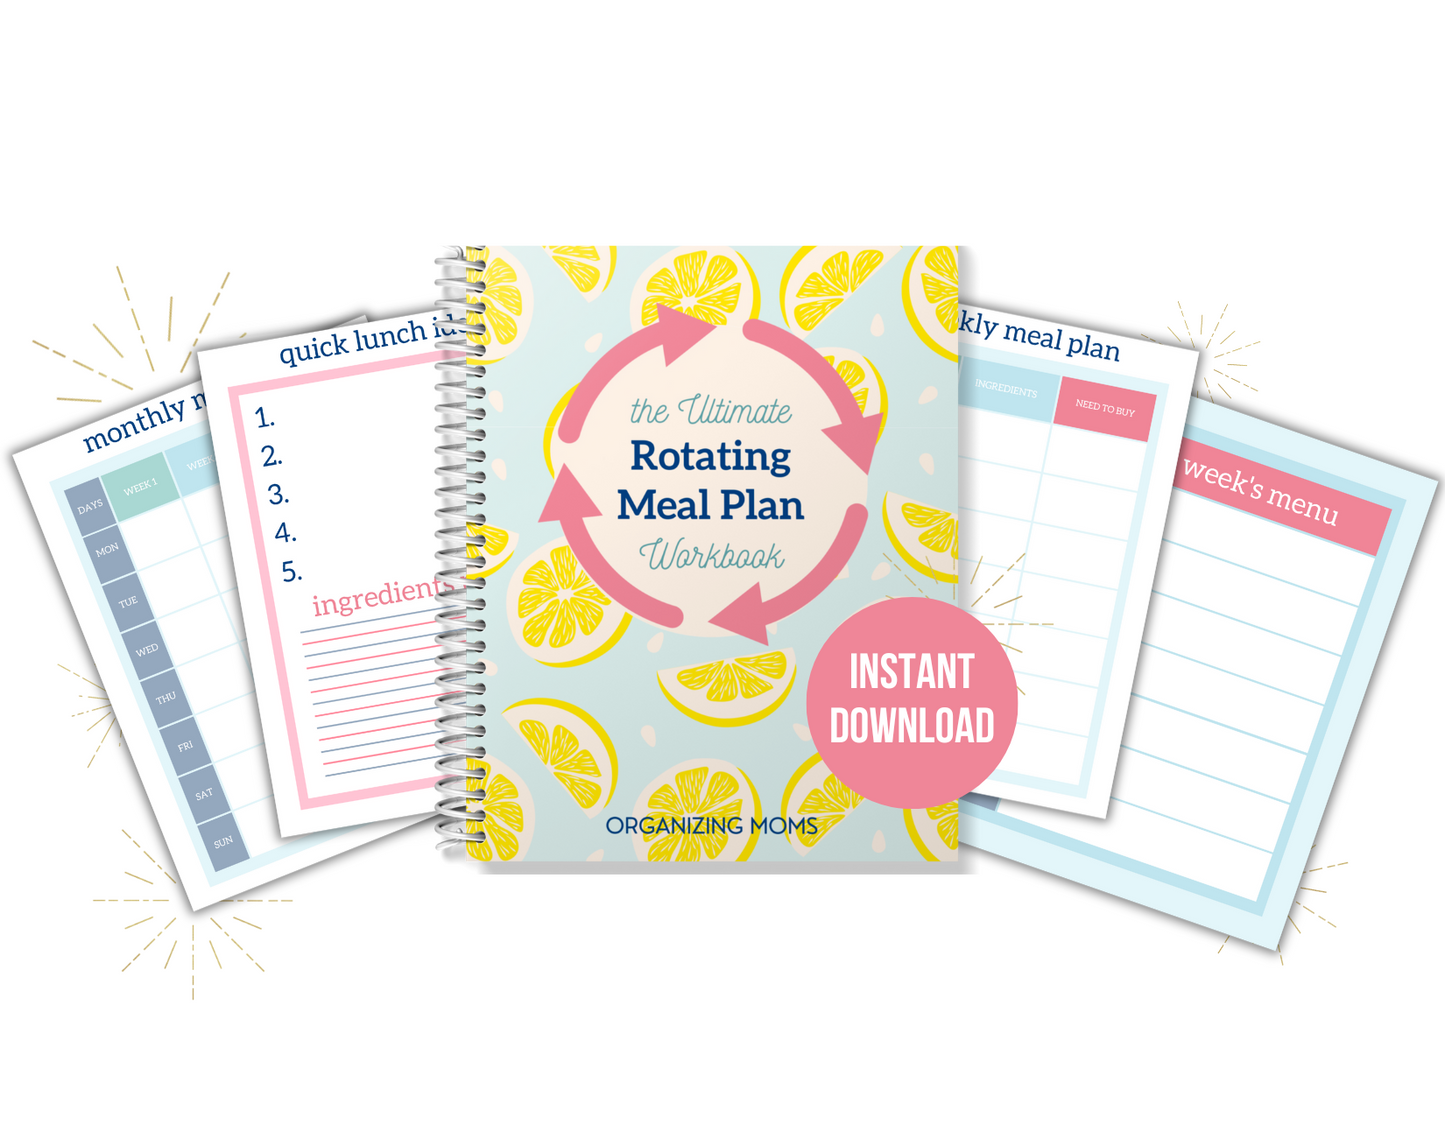 The Ultimate Rotating Meal Plan Workbook System - Printable Set